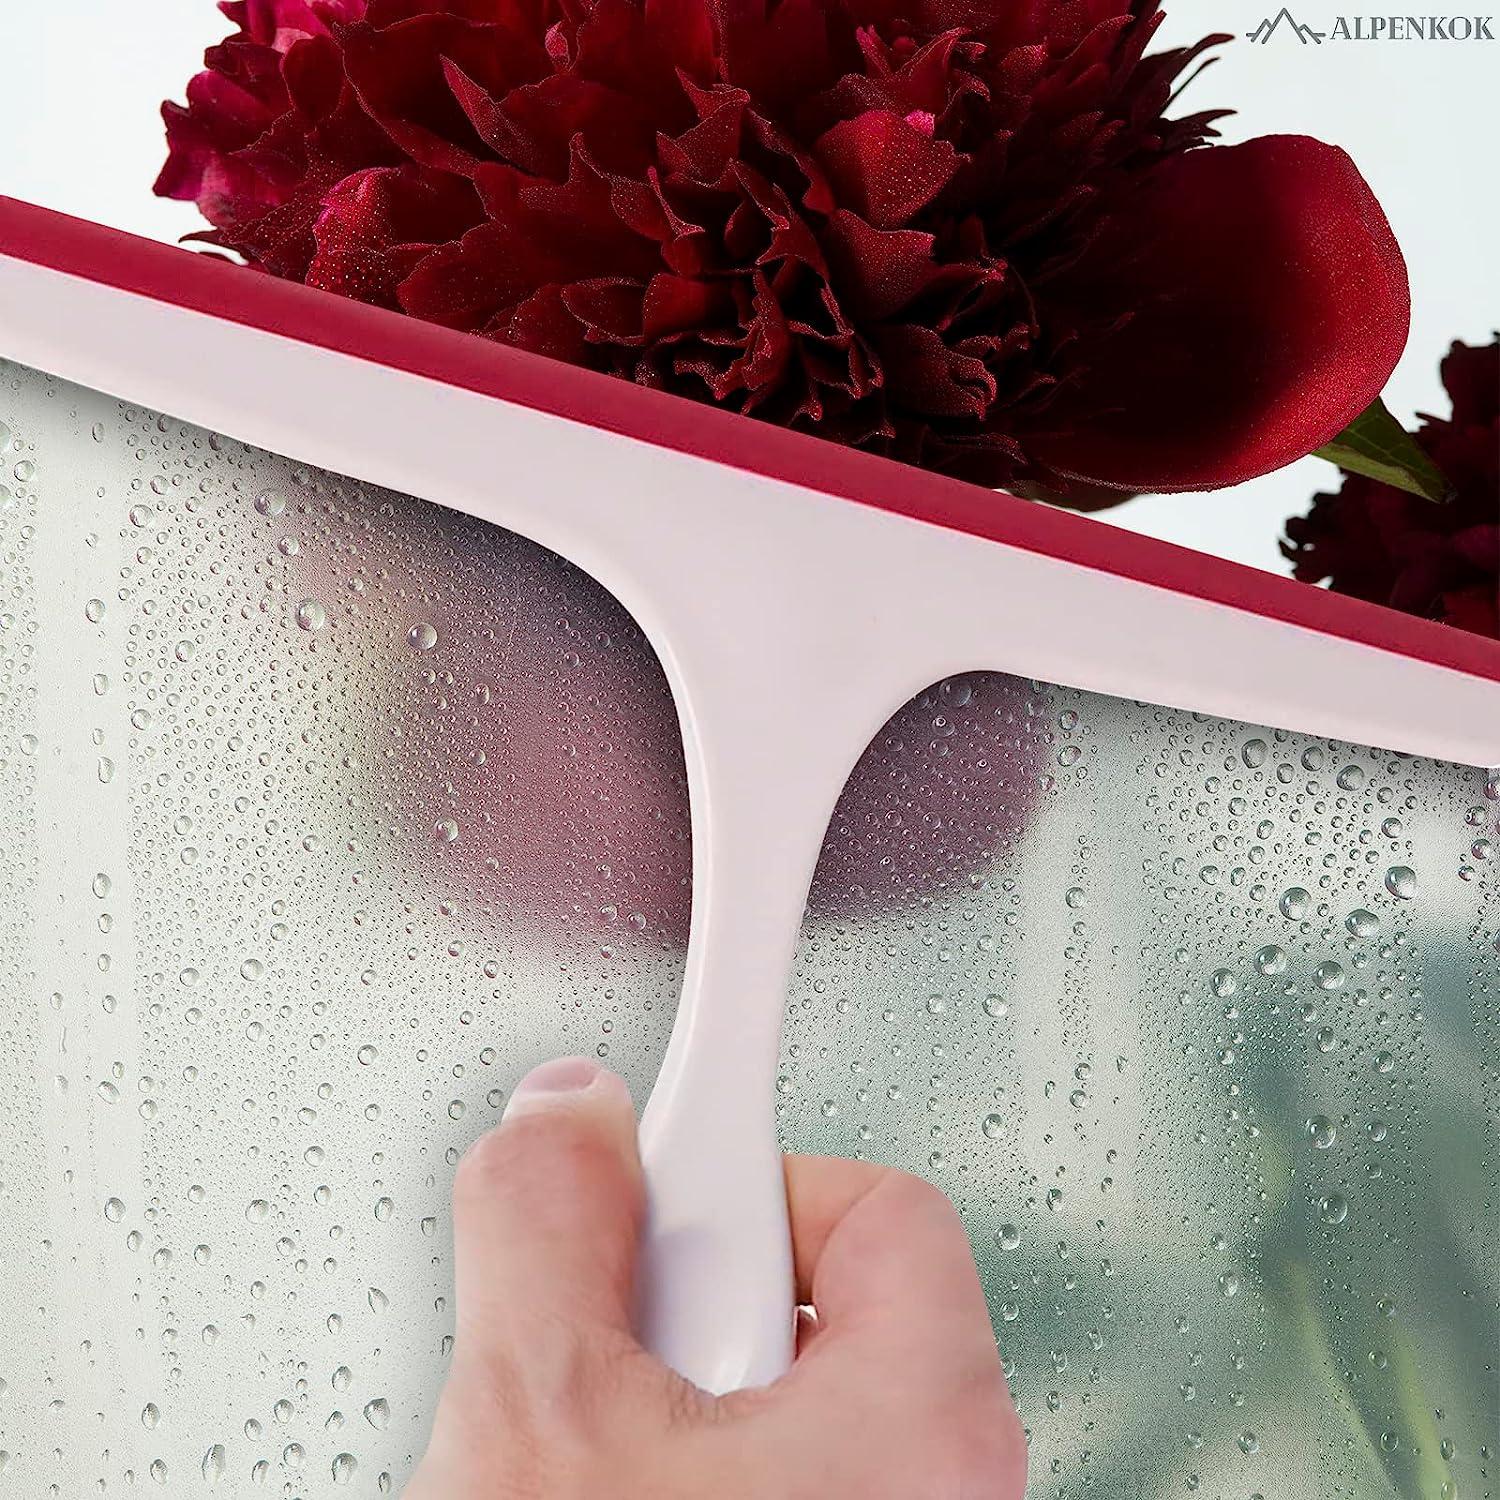 Mini Squeegee Scraper Cleaning Tool Multi-Purpose Squeegee in Cute Design  No Handle for Window Glass Shower Door Gray 